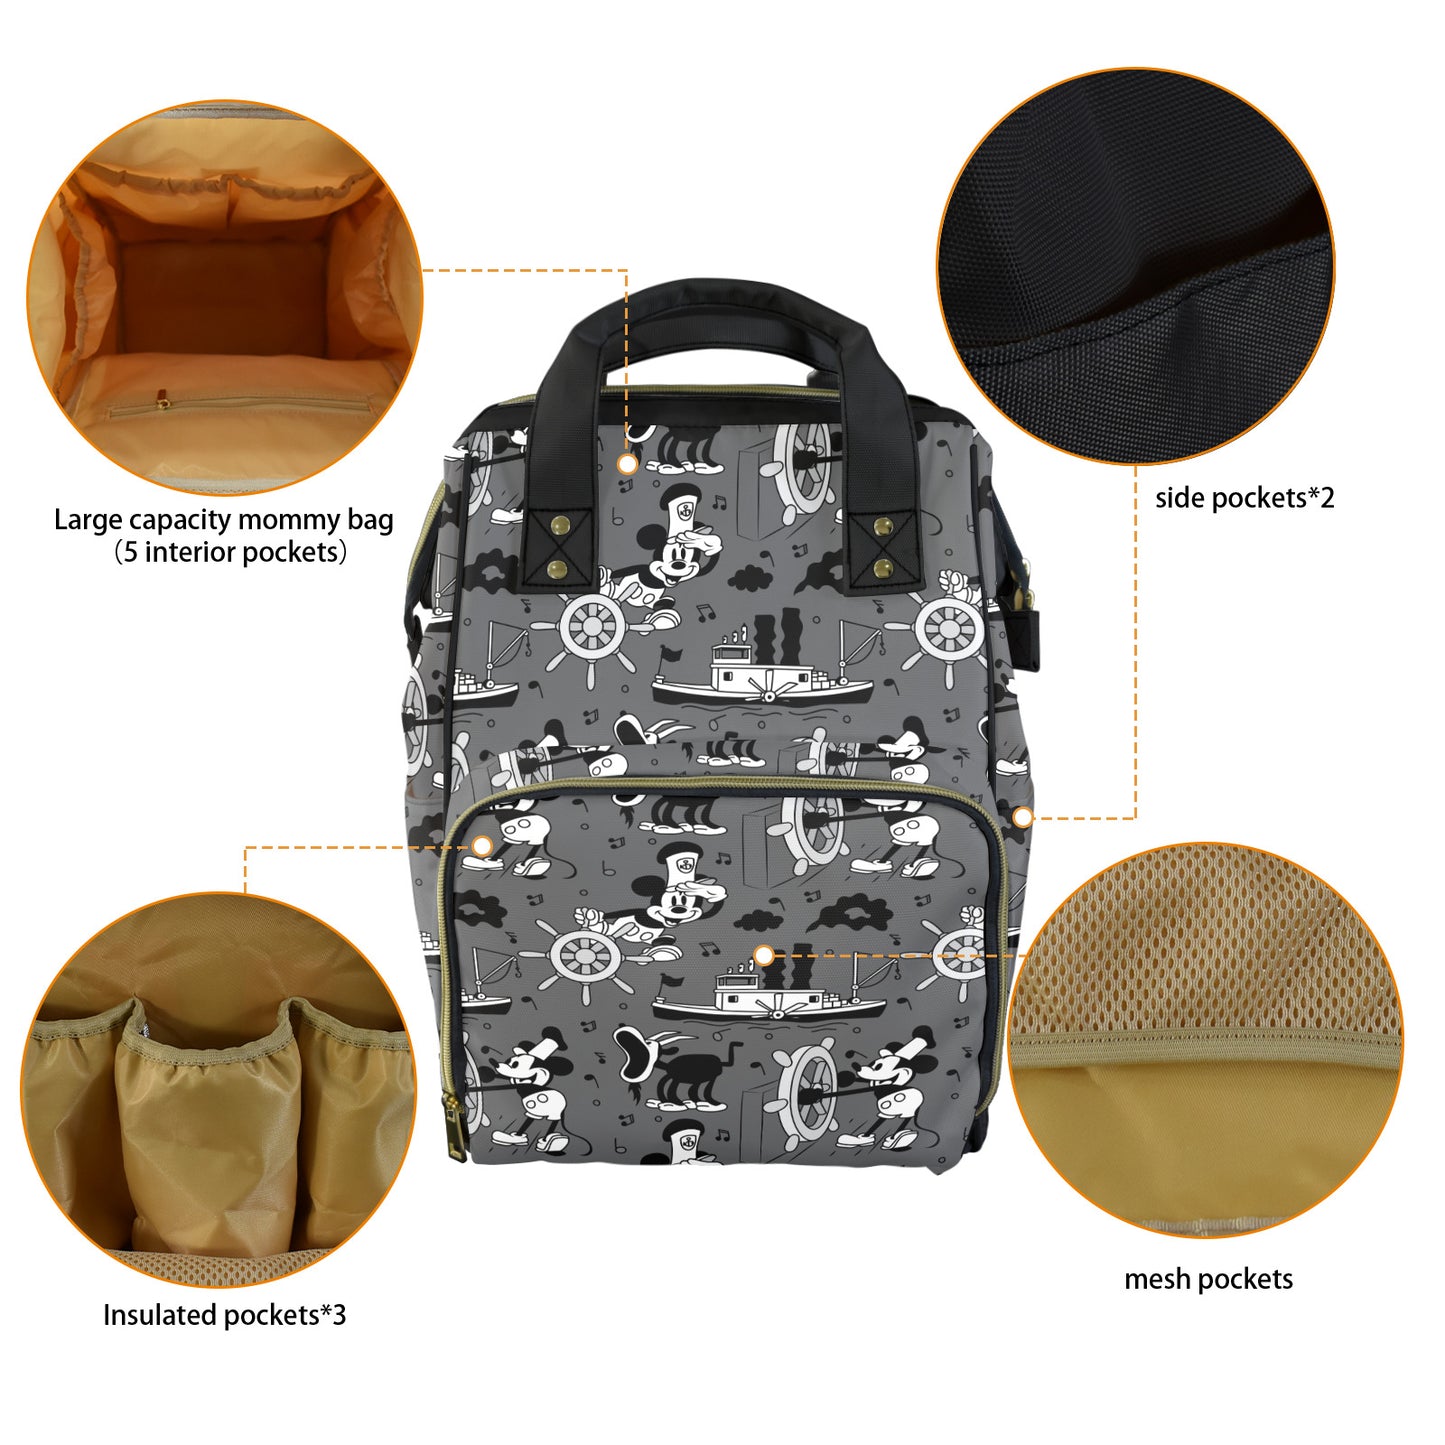 Steamboat Mickey Multi-Function Diaper Bag